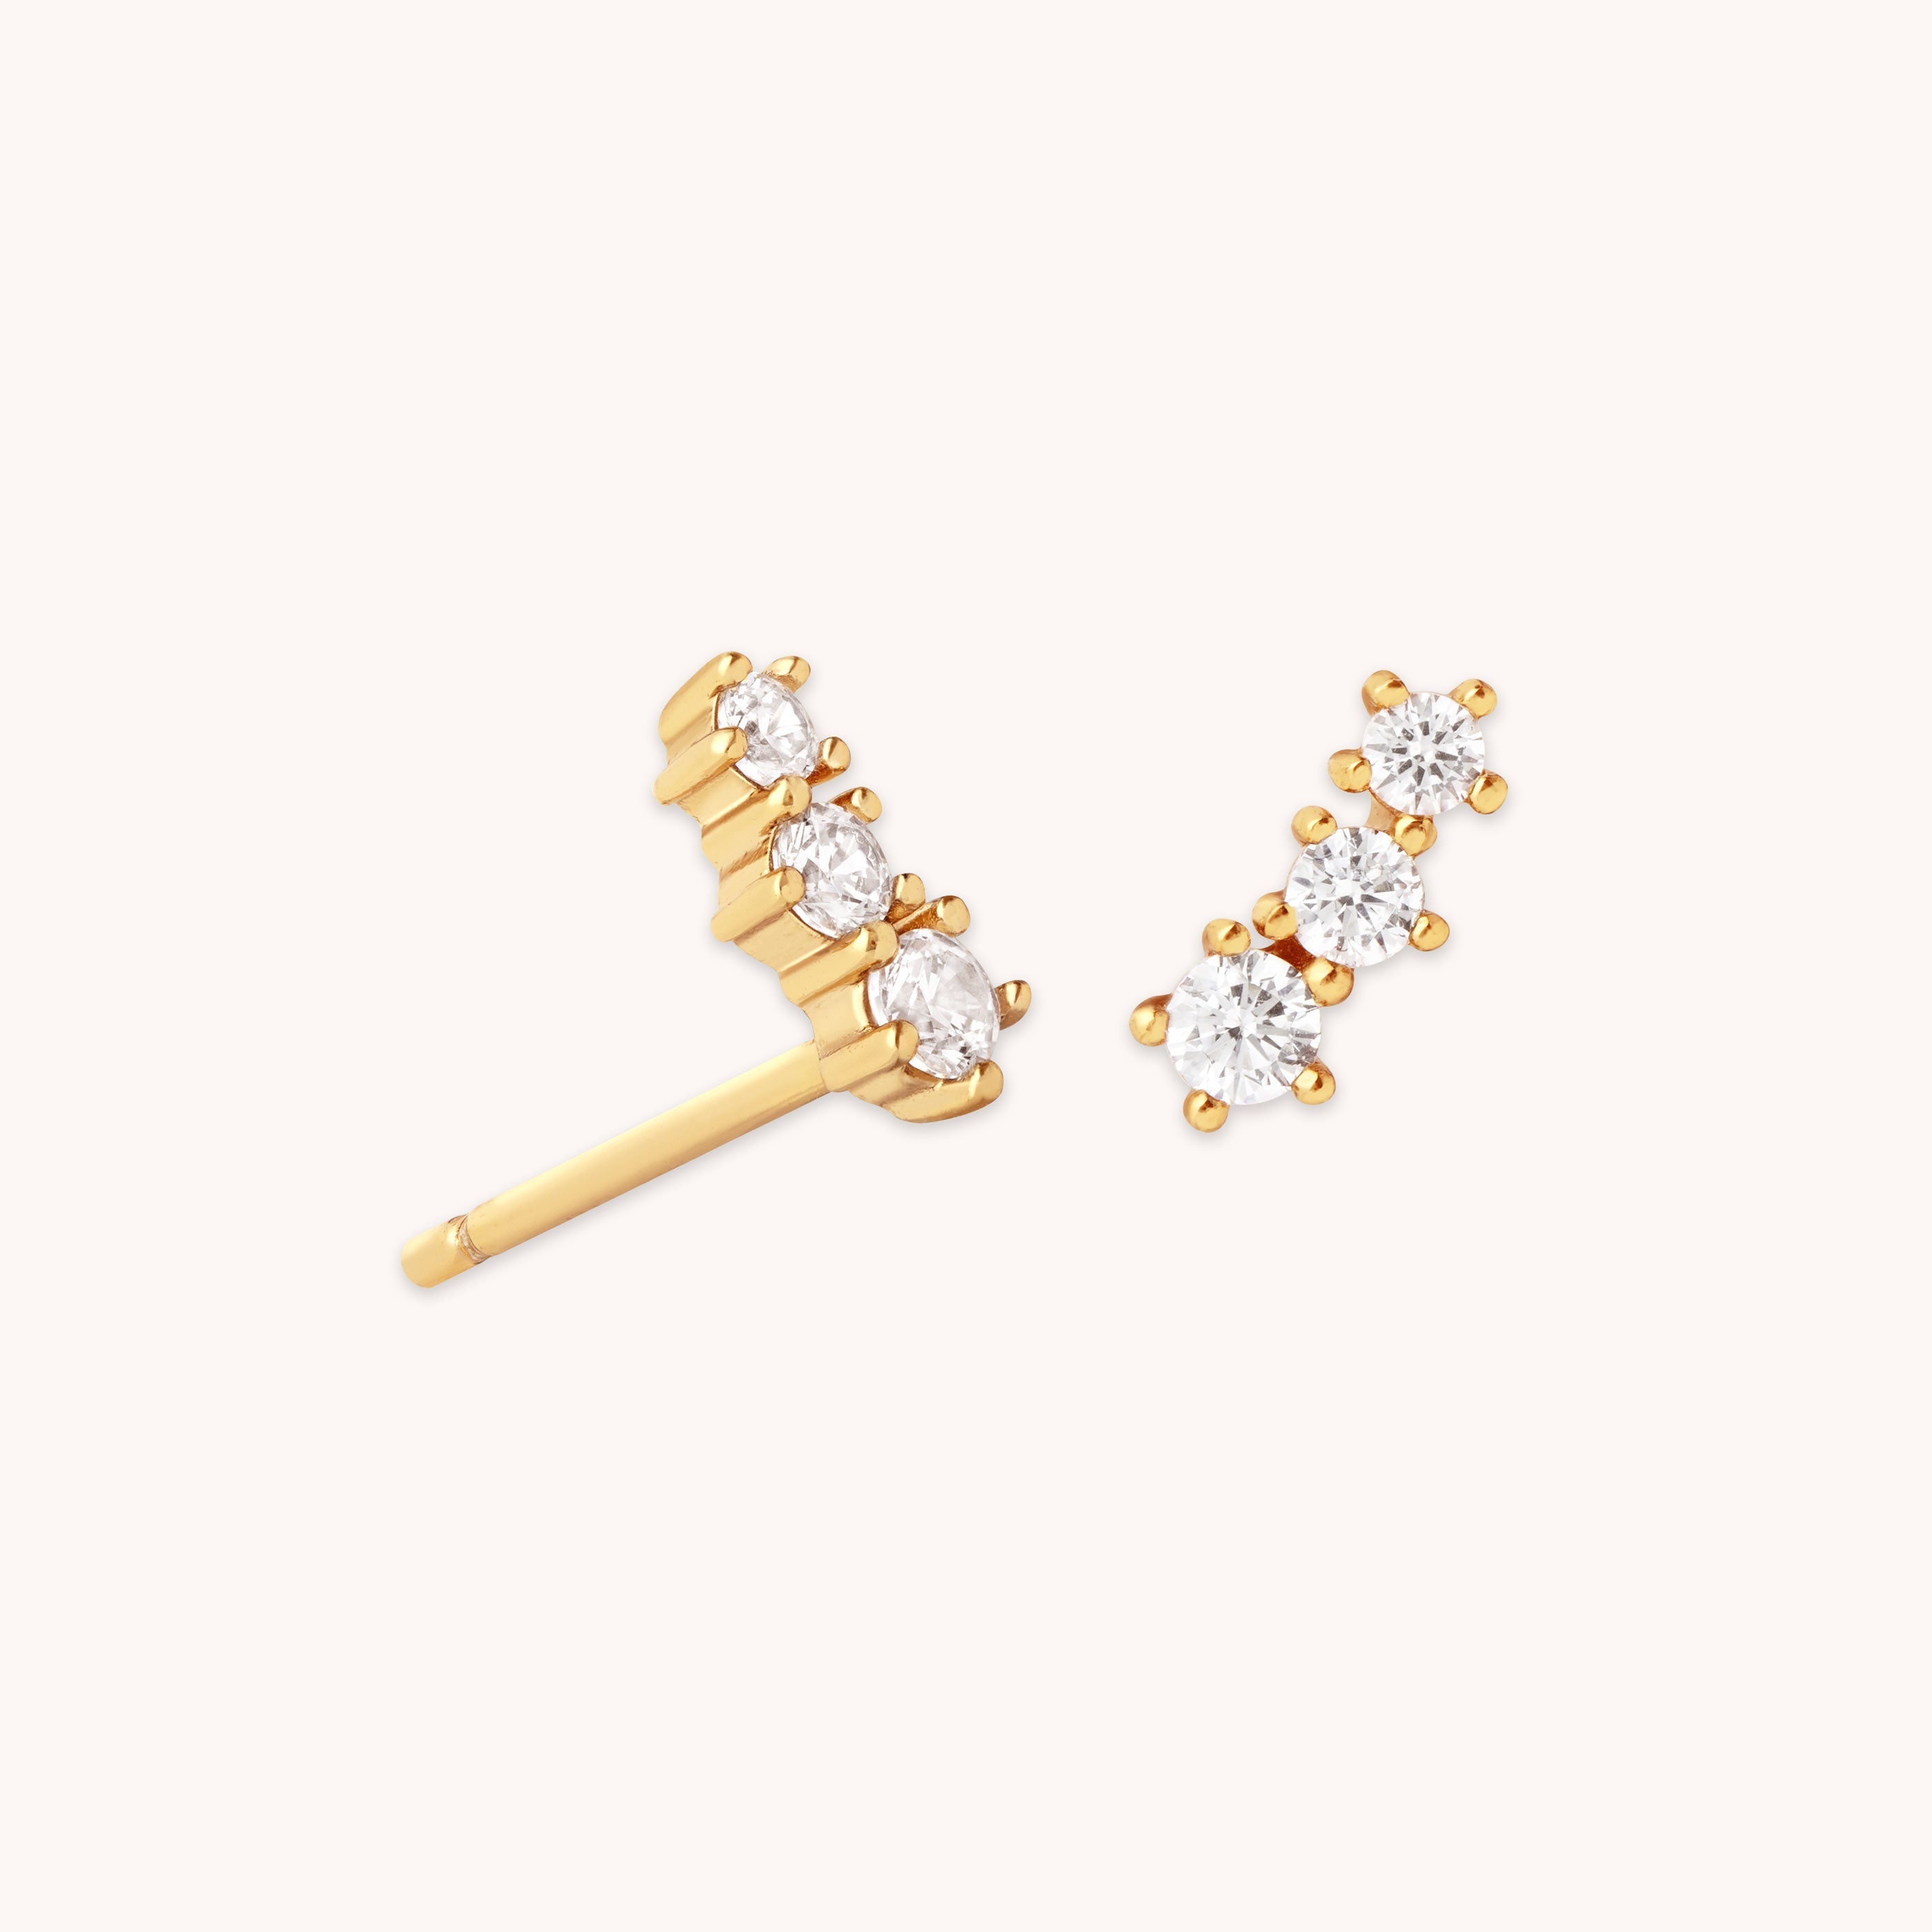 Glimmer Gold Climber Stud Earrings | Astrid & Miyu Earrings